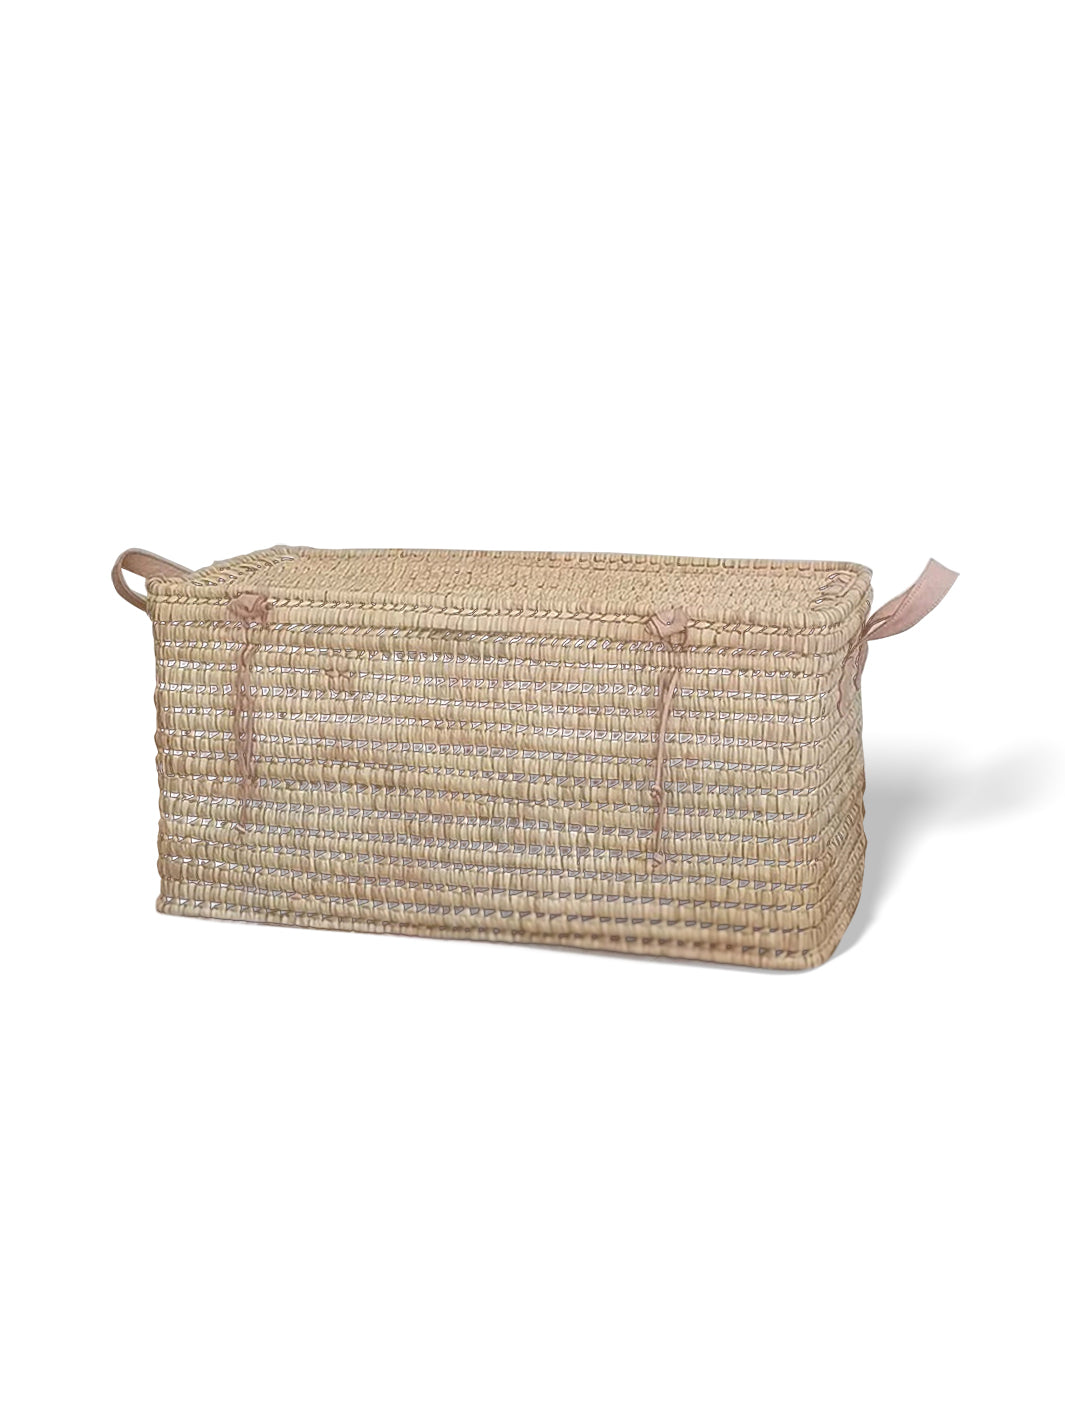 Handcrafted Wicker Palm Leaf Storage Trunk | Rattan Ottoman Storage Box with Lid Libitii Baskets LIB-0014